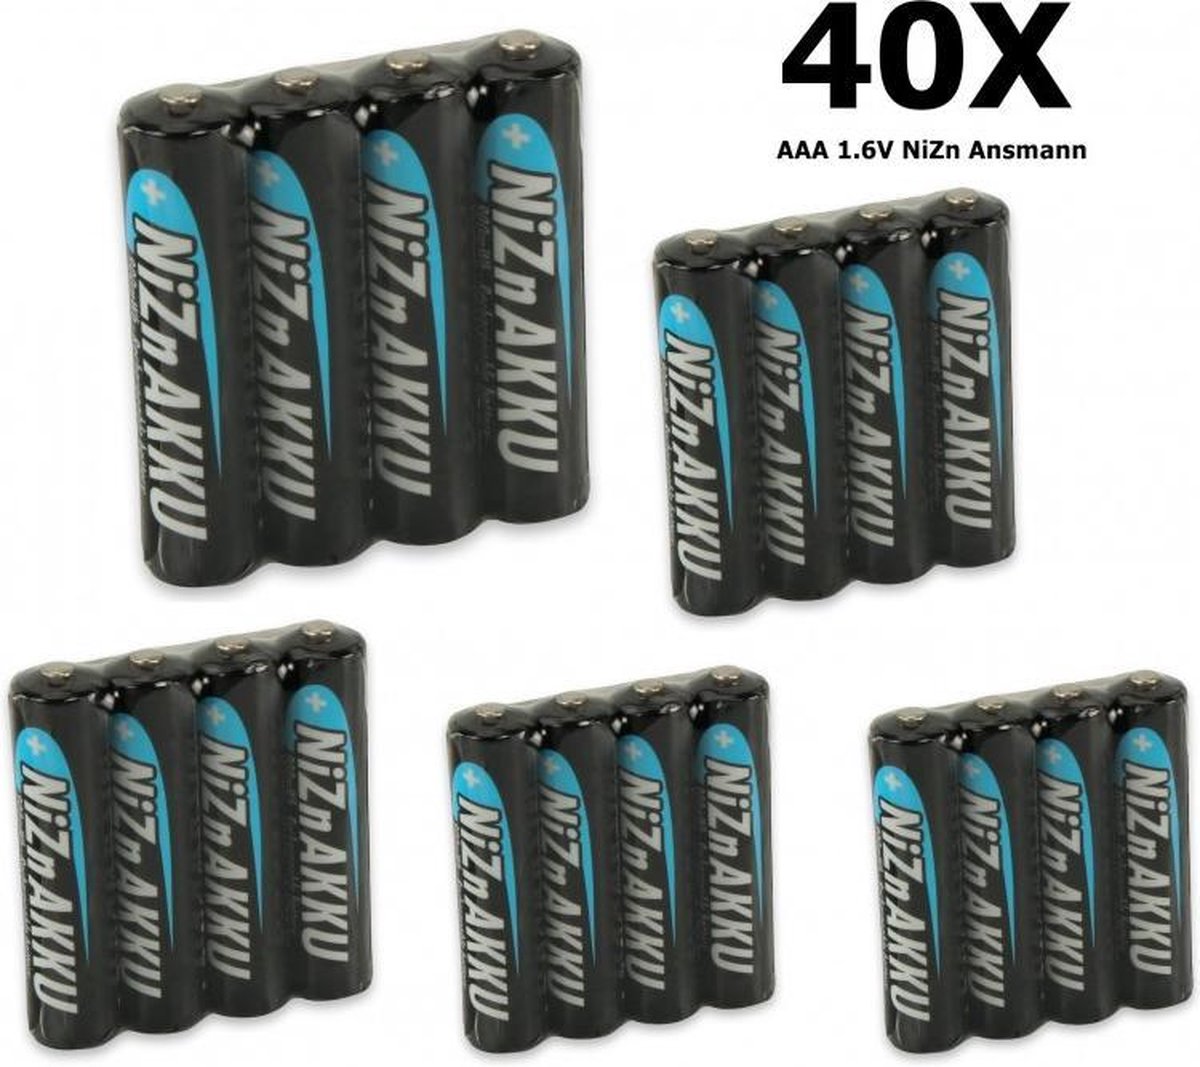 40 Stuks AAA 1.6V NiZn Ansmann Oplaadbaar Batterijen 550mAh